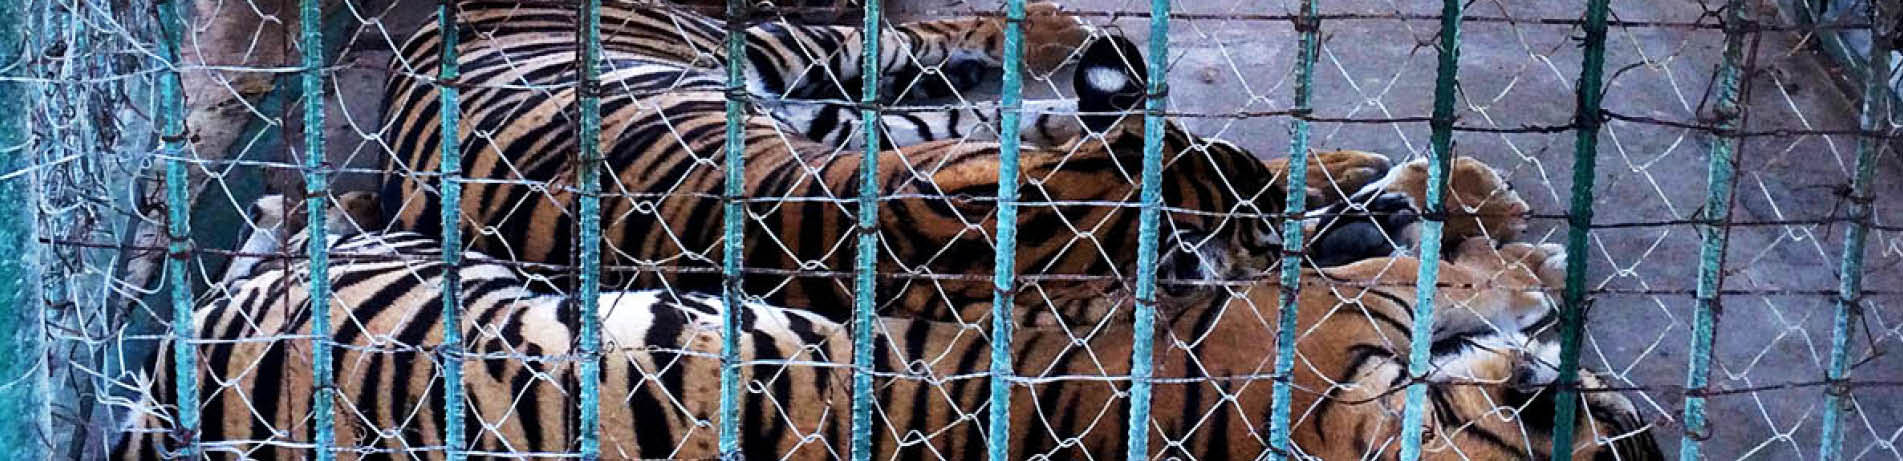 Captive tigers behind fence, China